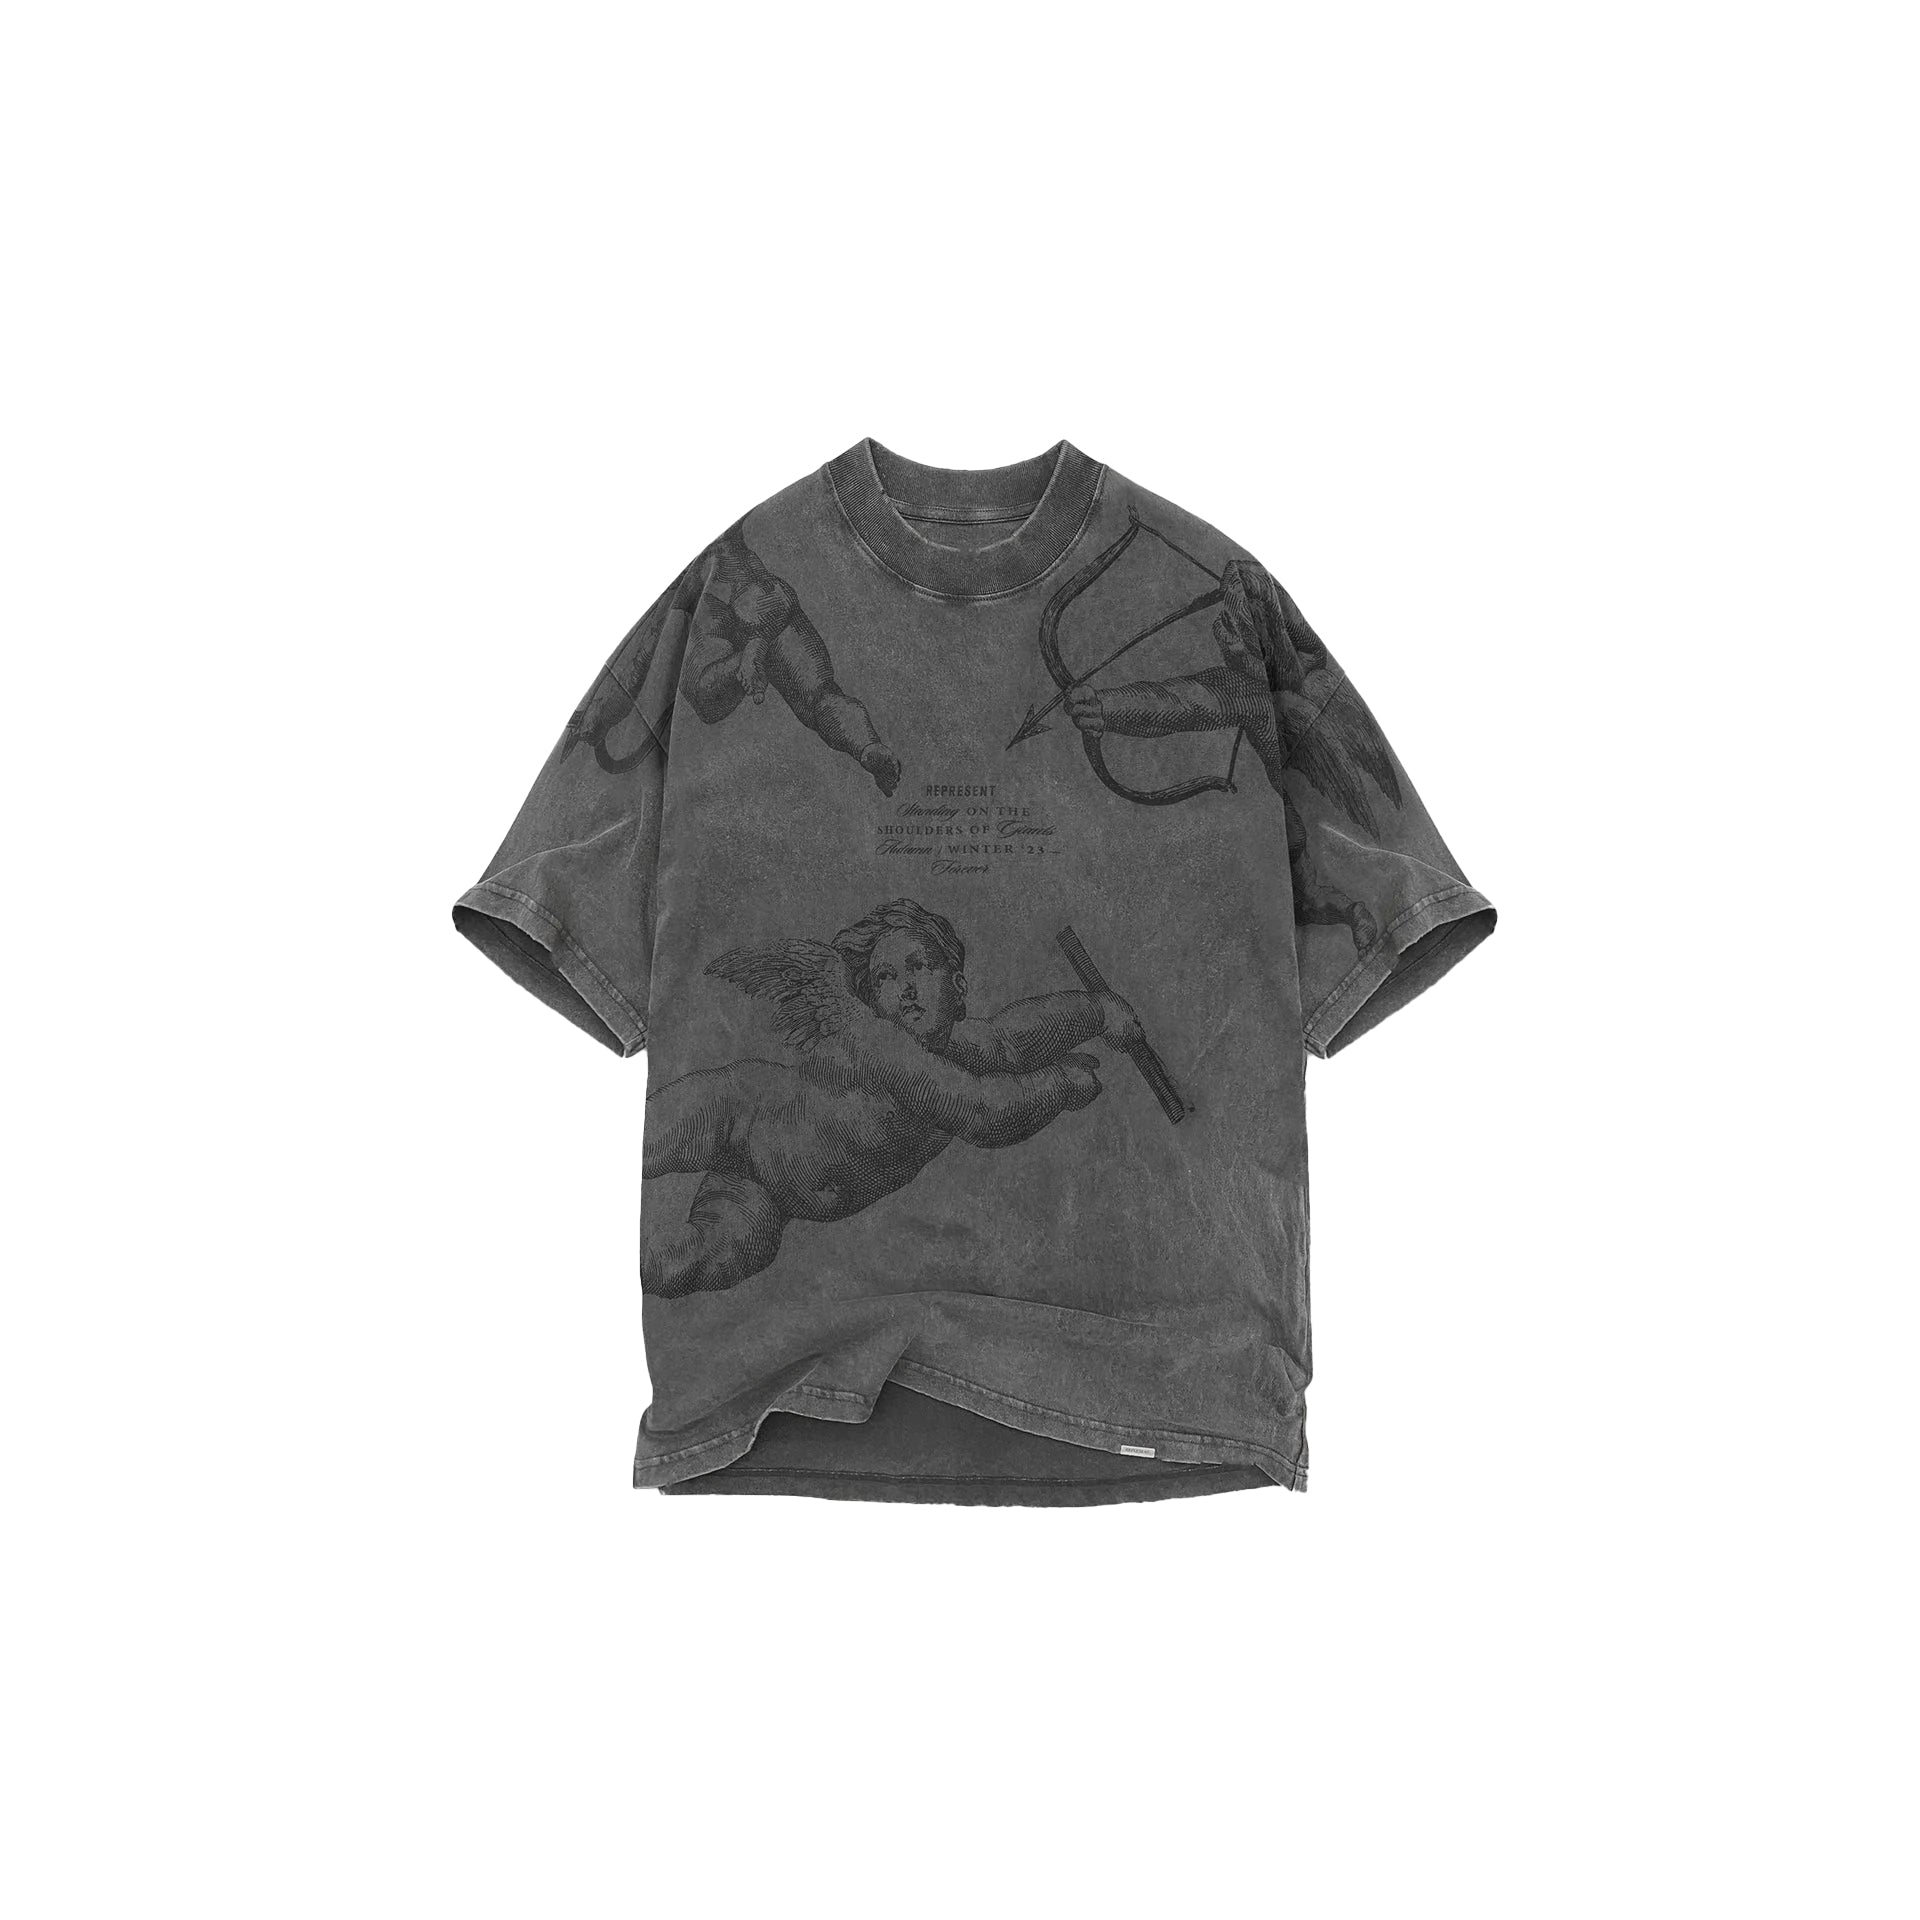 Represent Cherub All Over T-Shirt Vintage Grey